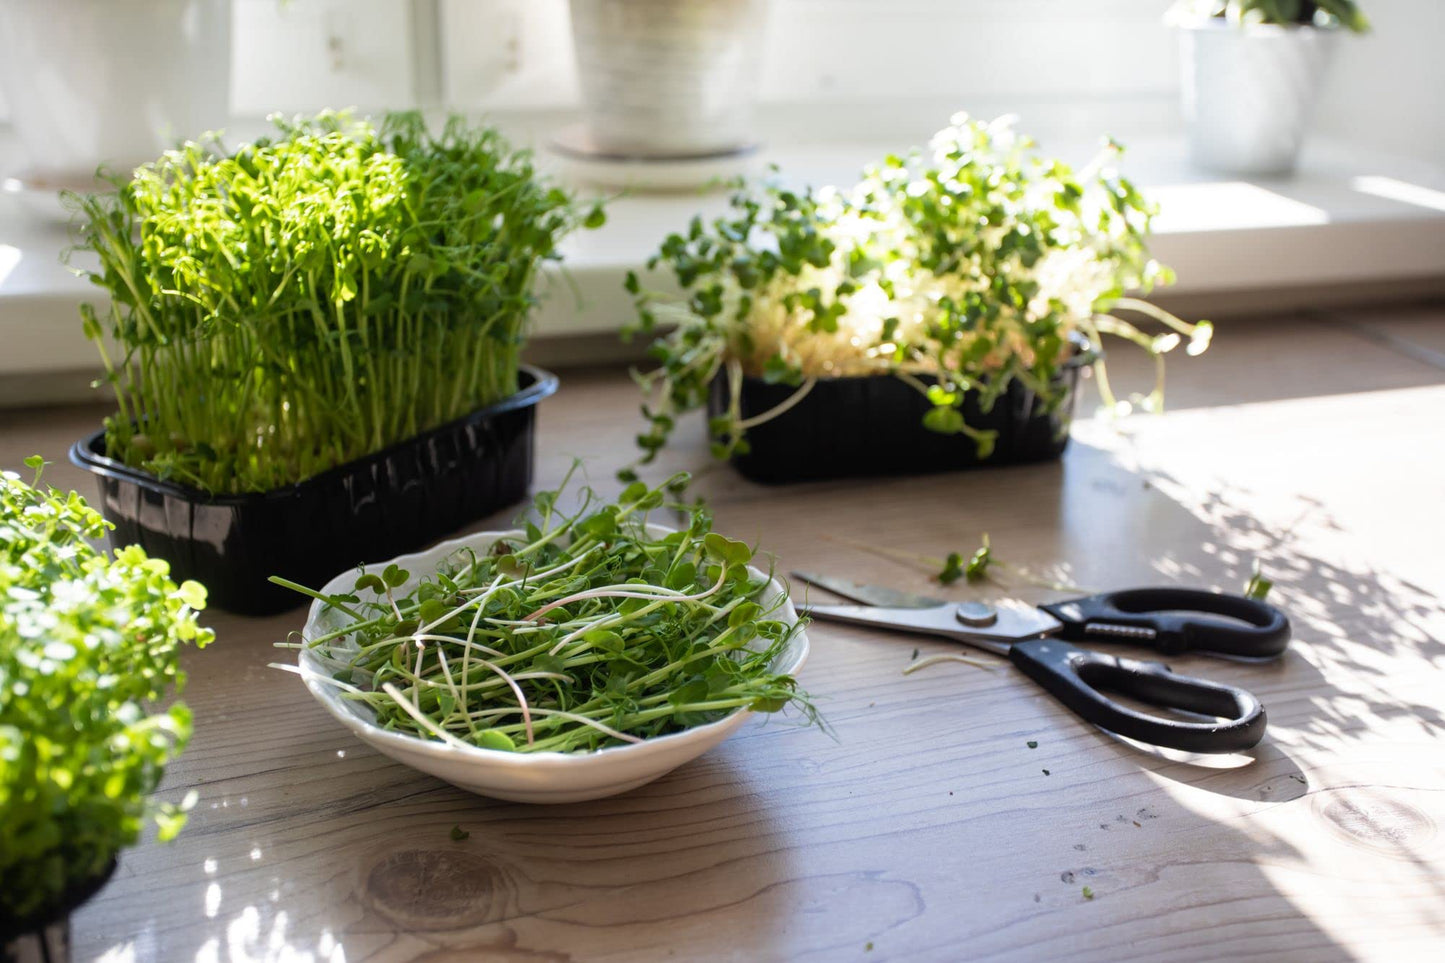 Acqua Smart Garden 1.0 - Complete Grow Your Own Package - AcquaGarden